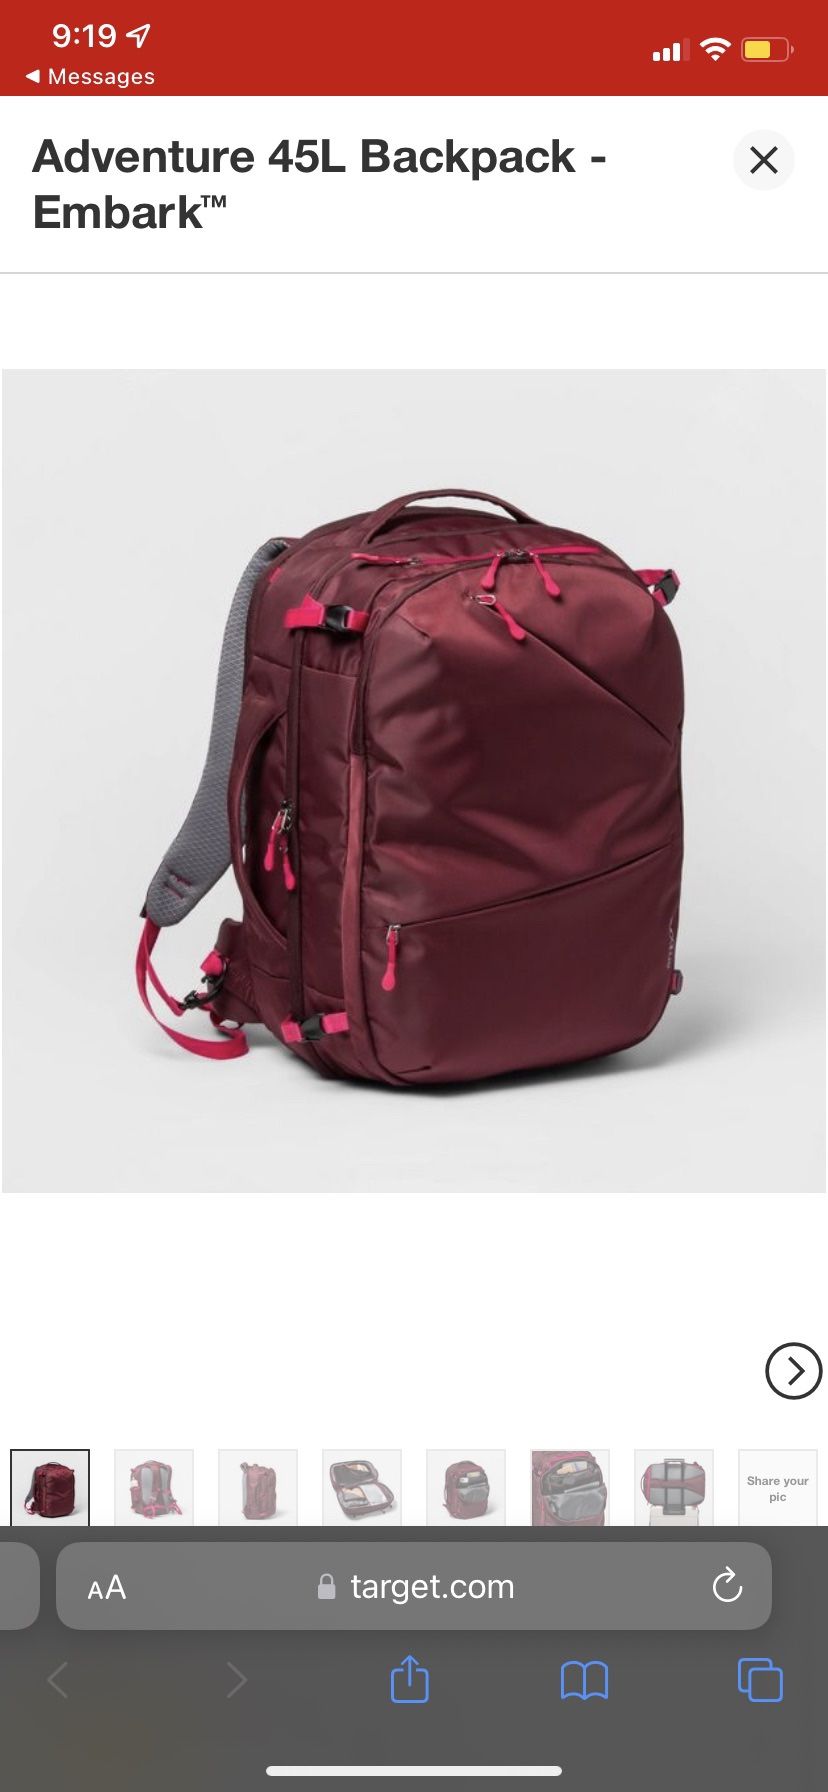 Adventure 45L Backpack - Embark